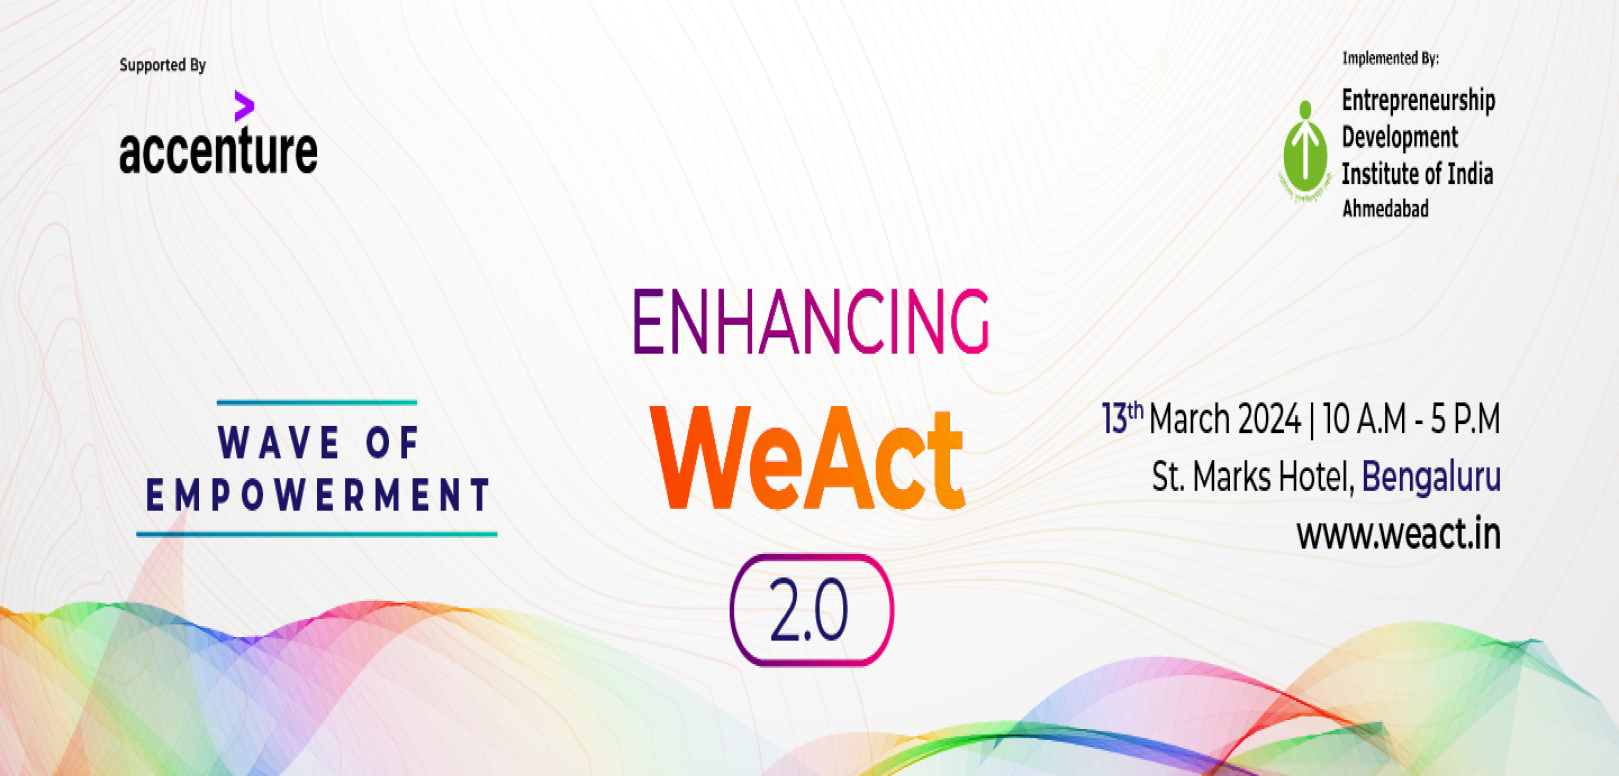 Enhancing Weact 2.0